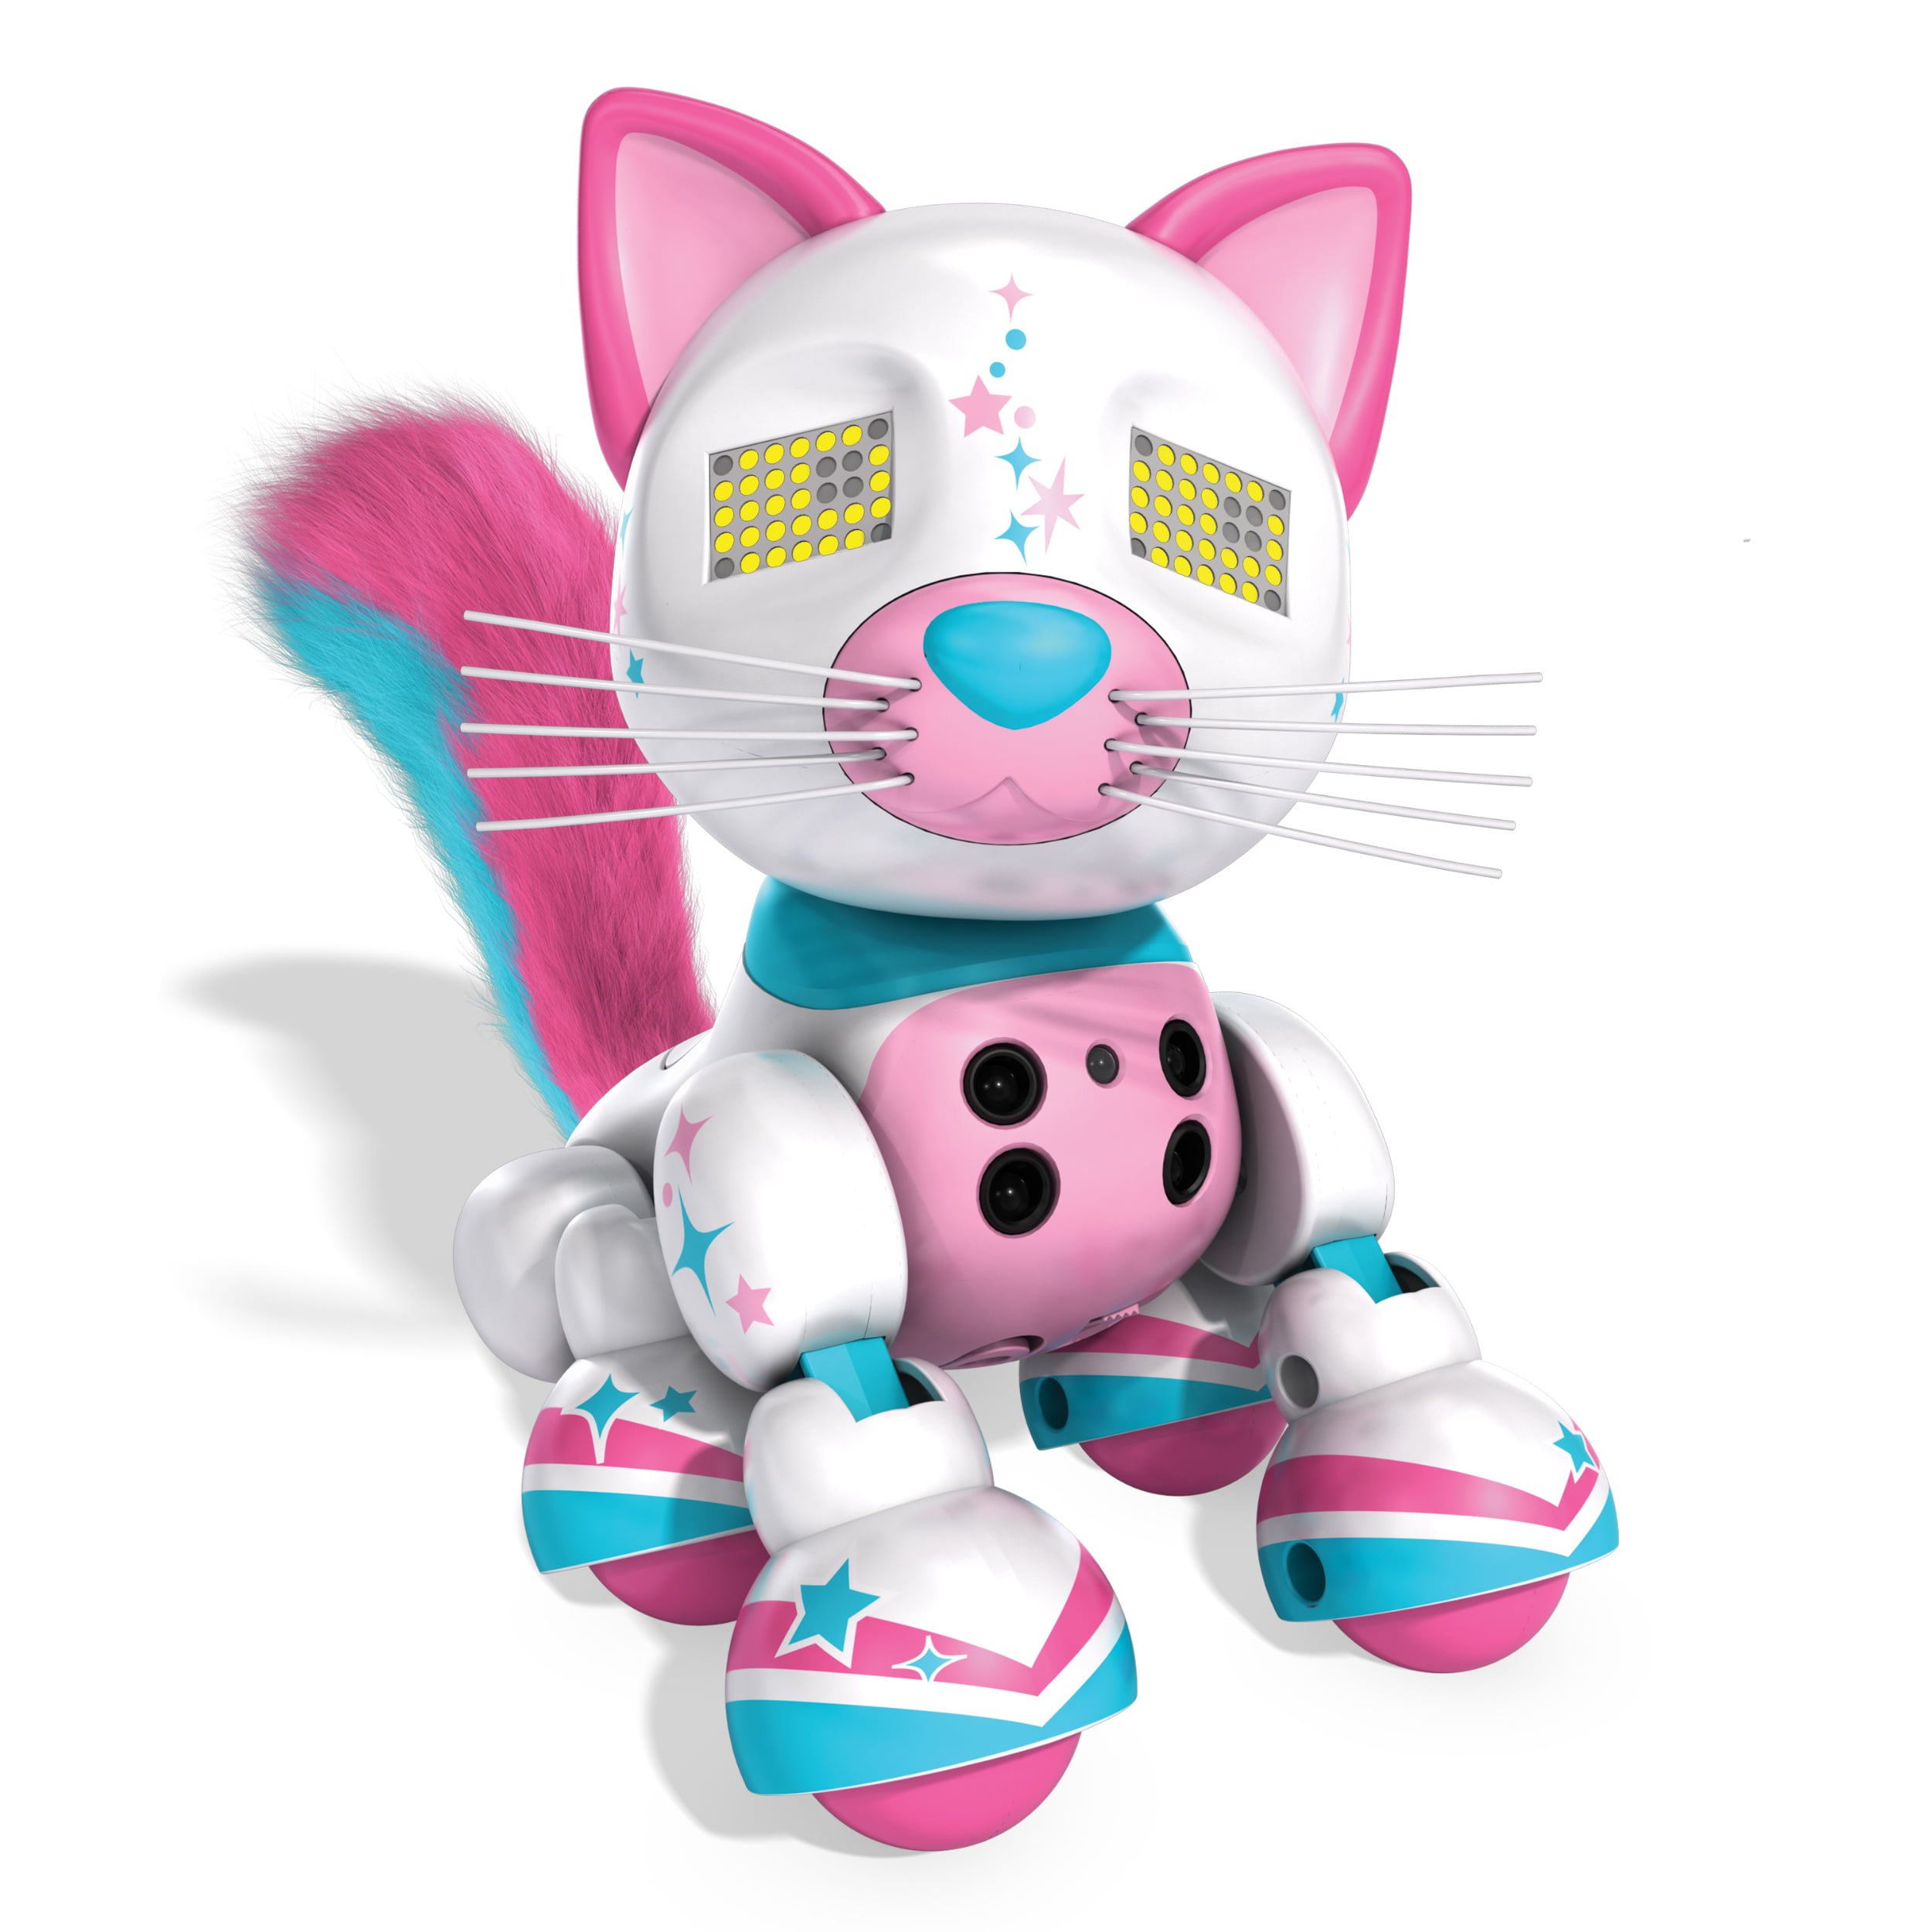 CHIC Kitty Robot Cat Pink ZOOMER Interactive LOVE Meowzies Kitten 